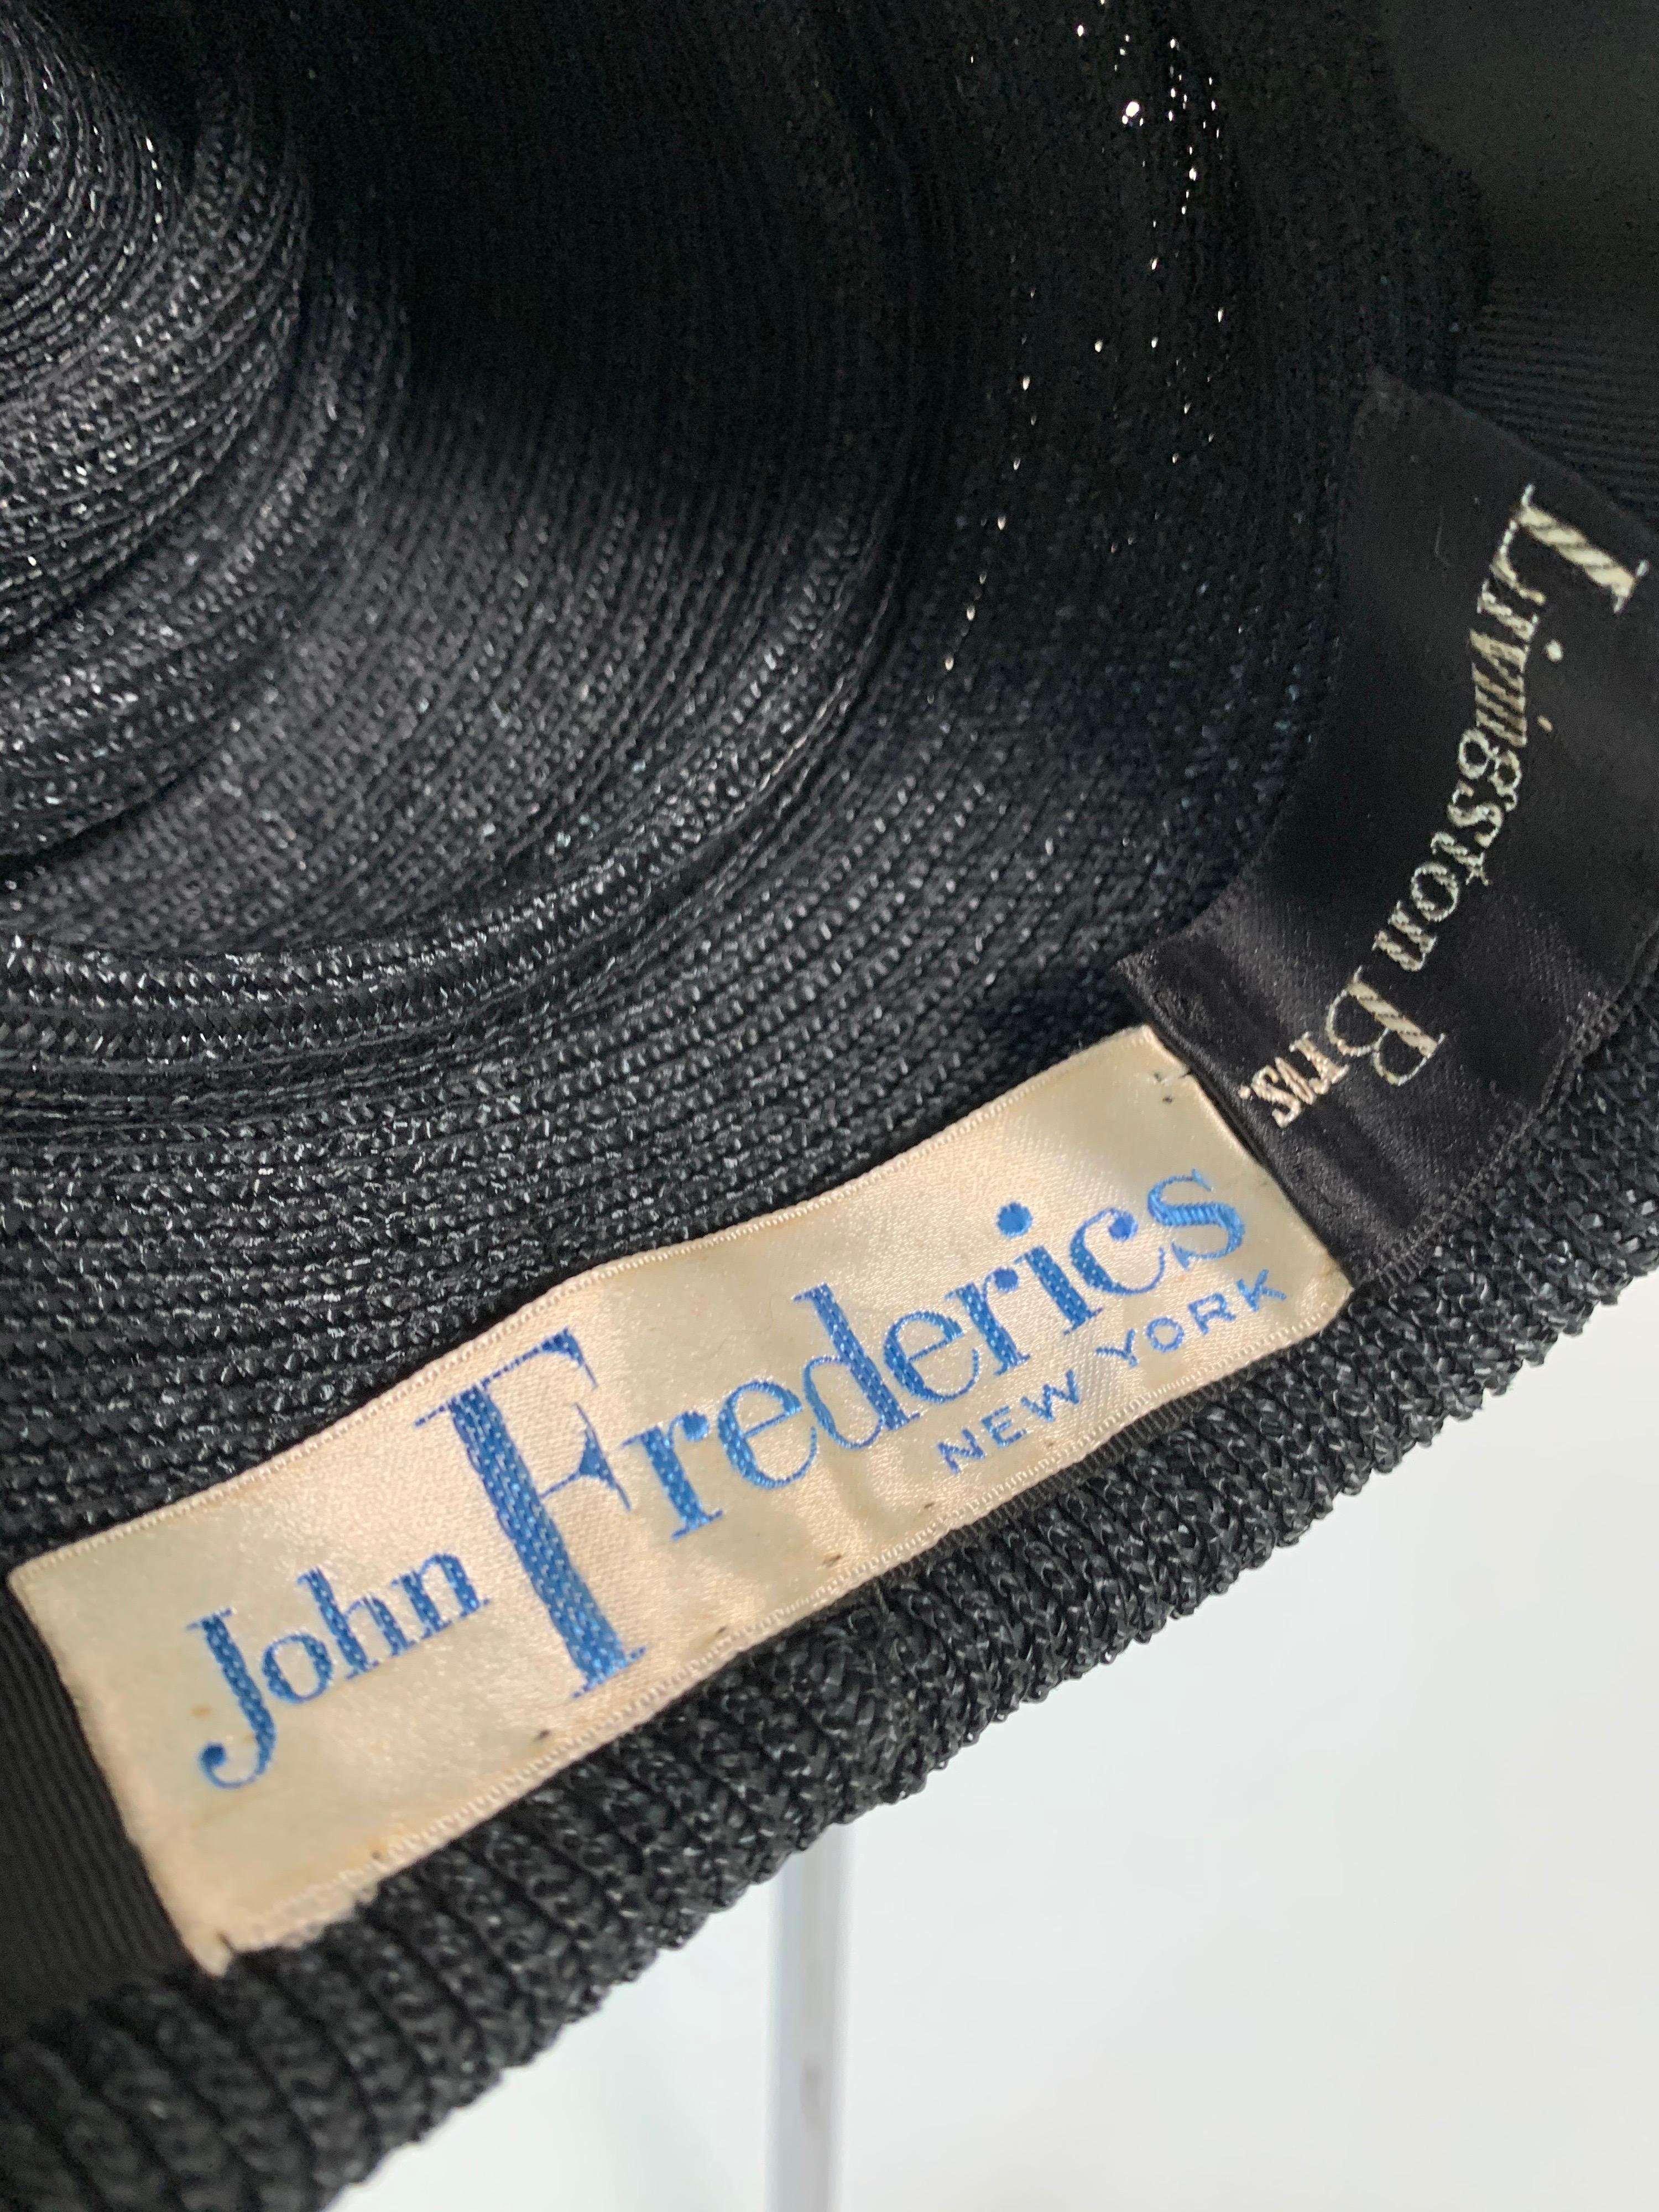 1950 John Frederics Black Straw Avant Guarde Sculpted Hat  For Sale 4